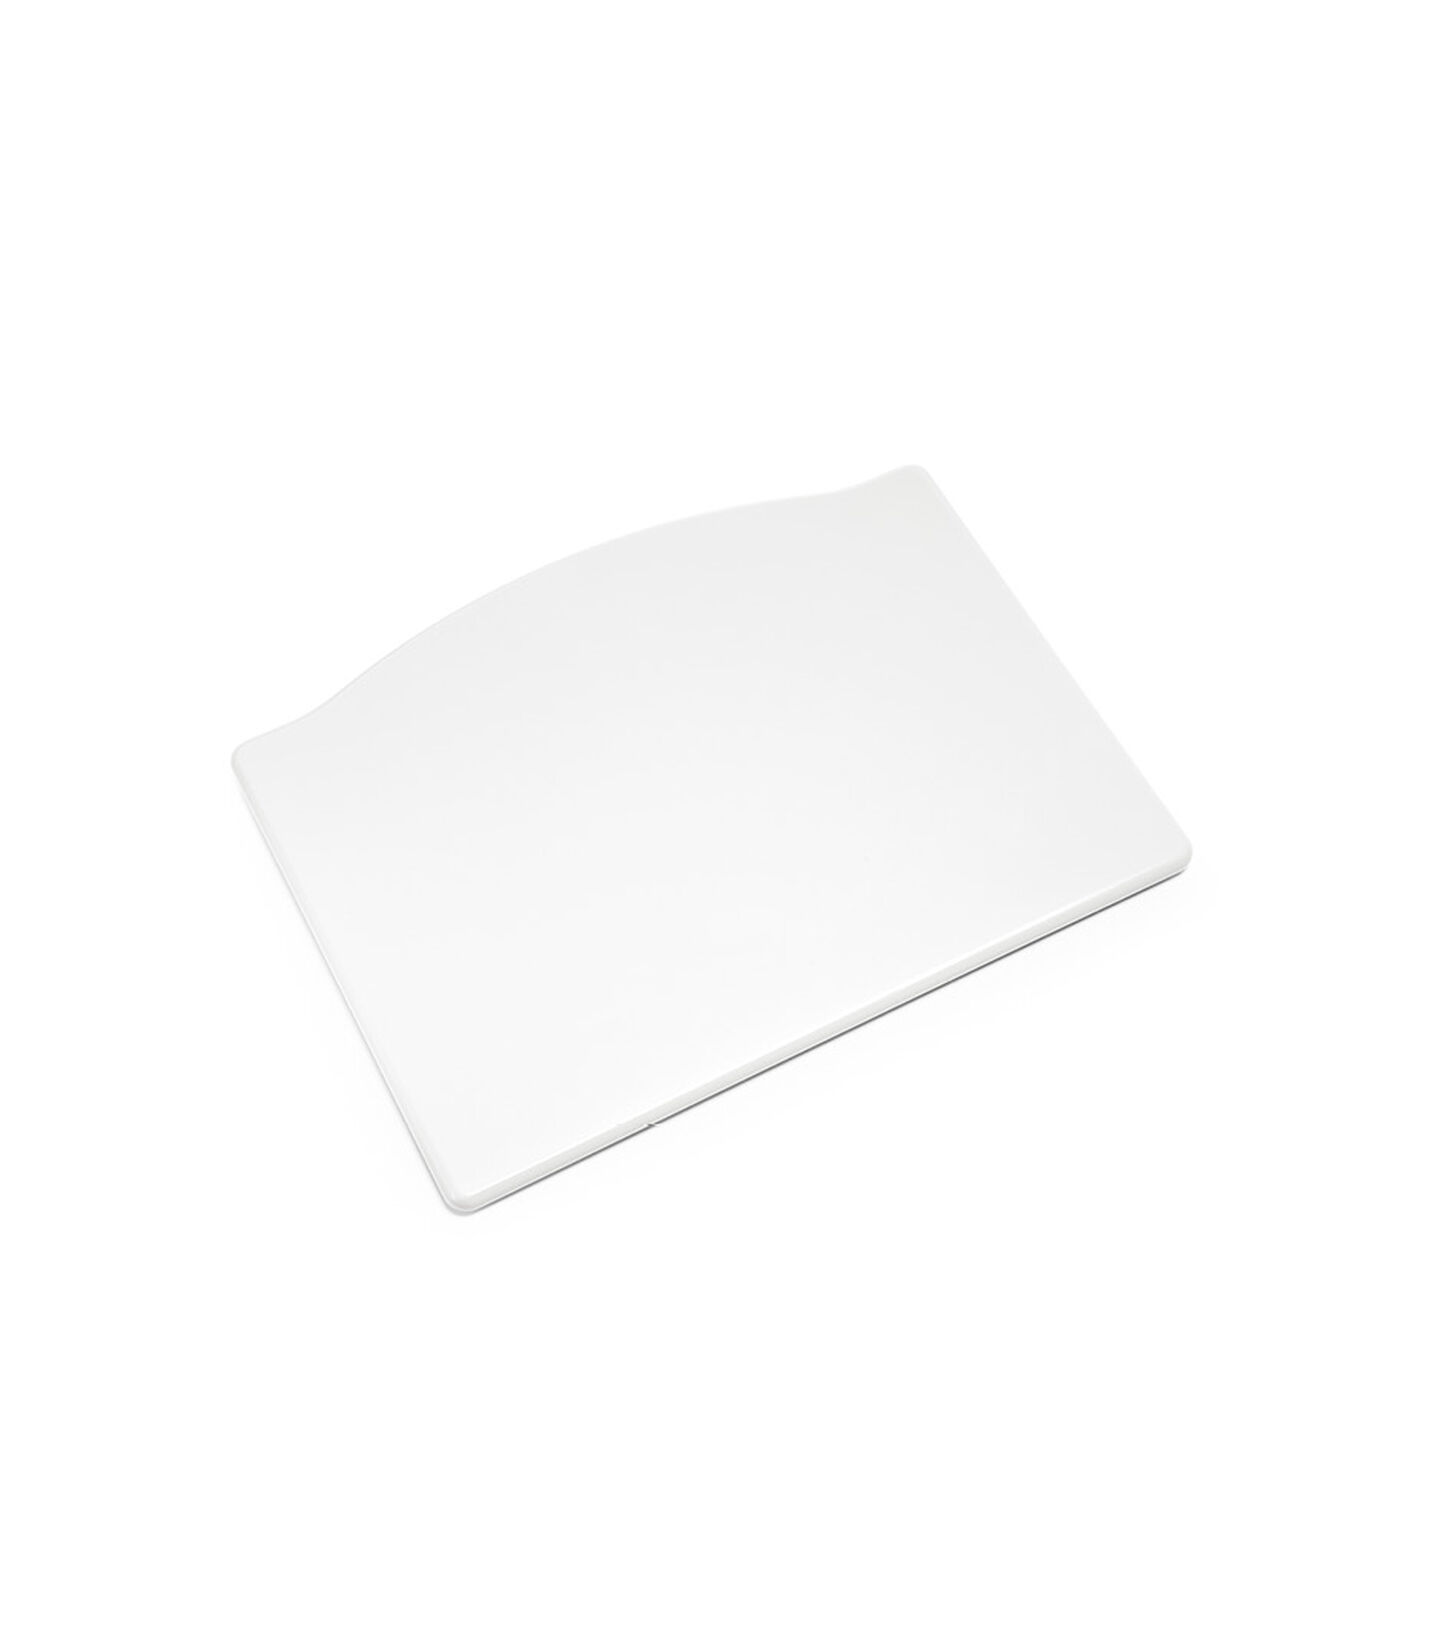 Tripp Trapp® Fodplade White, White, mainview view 1